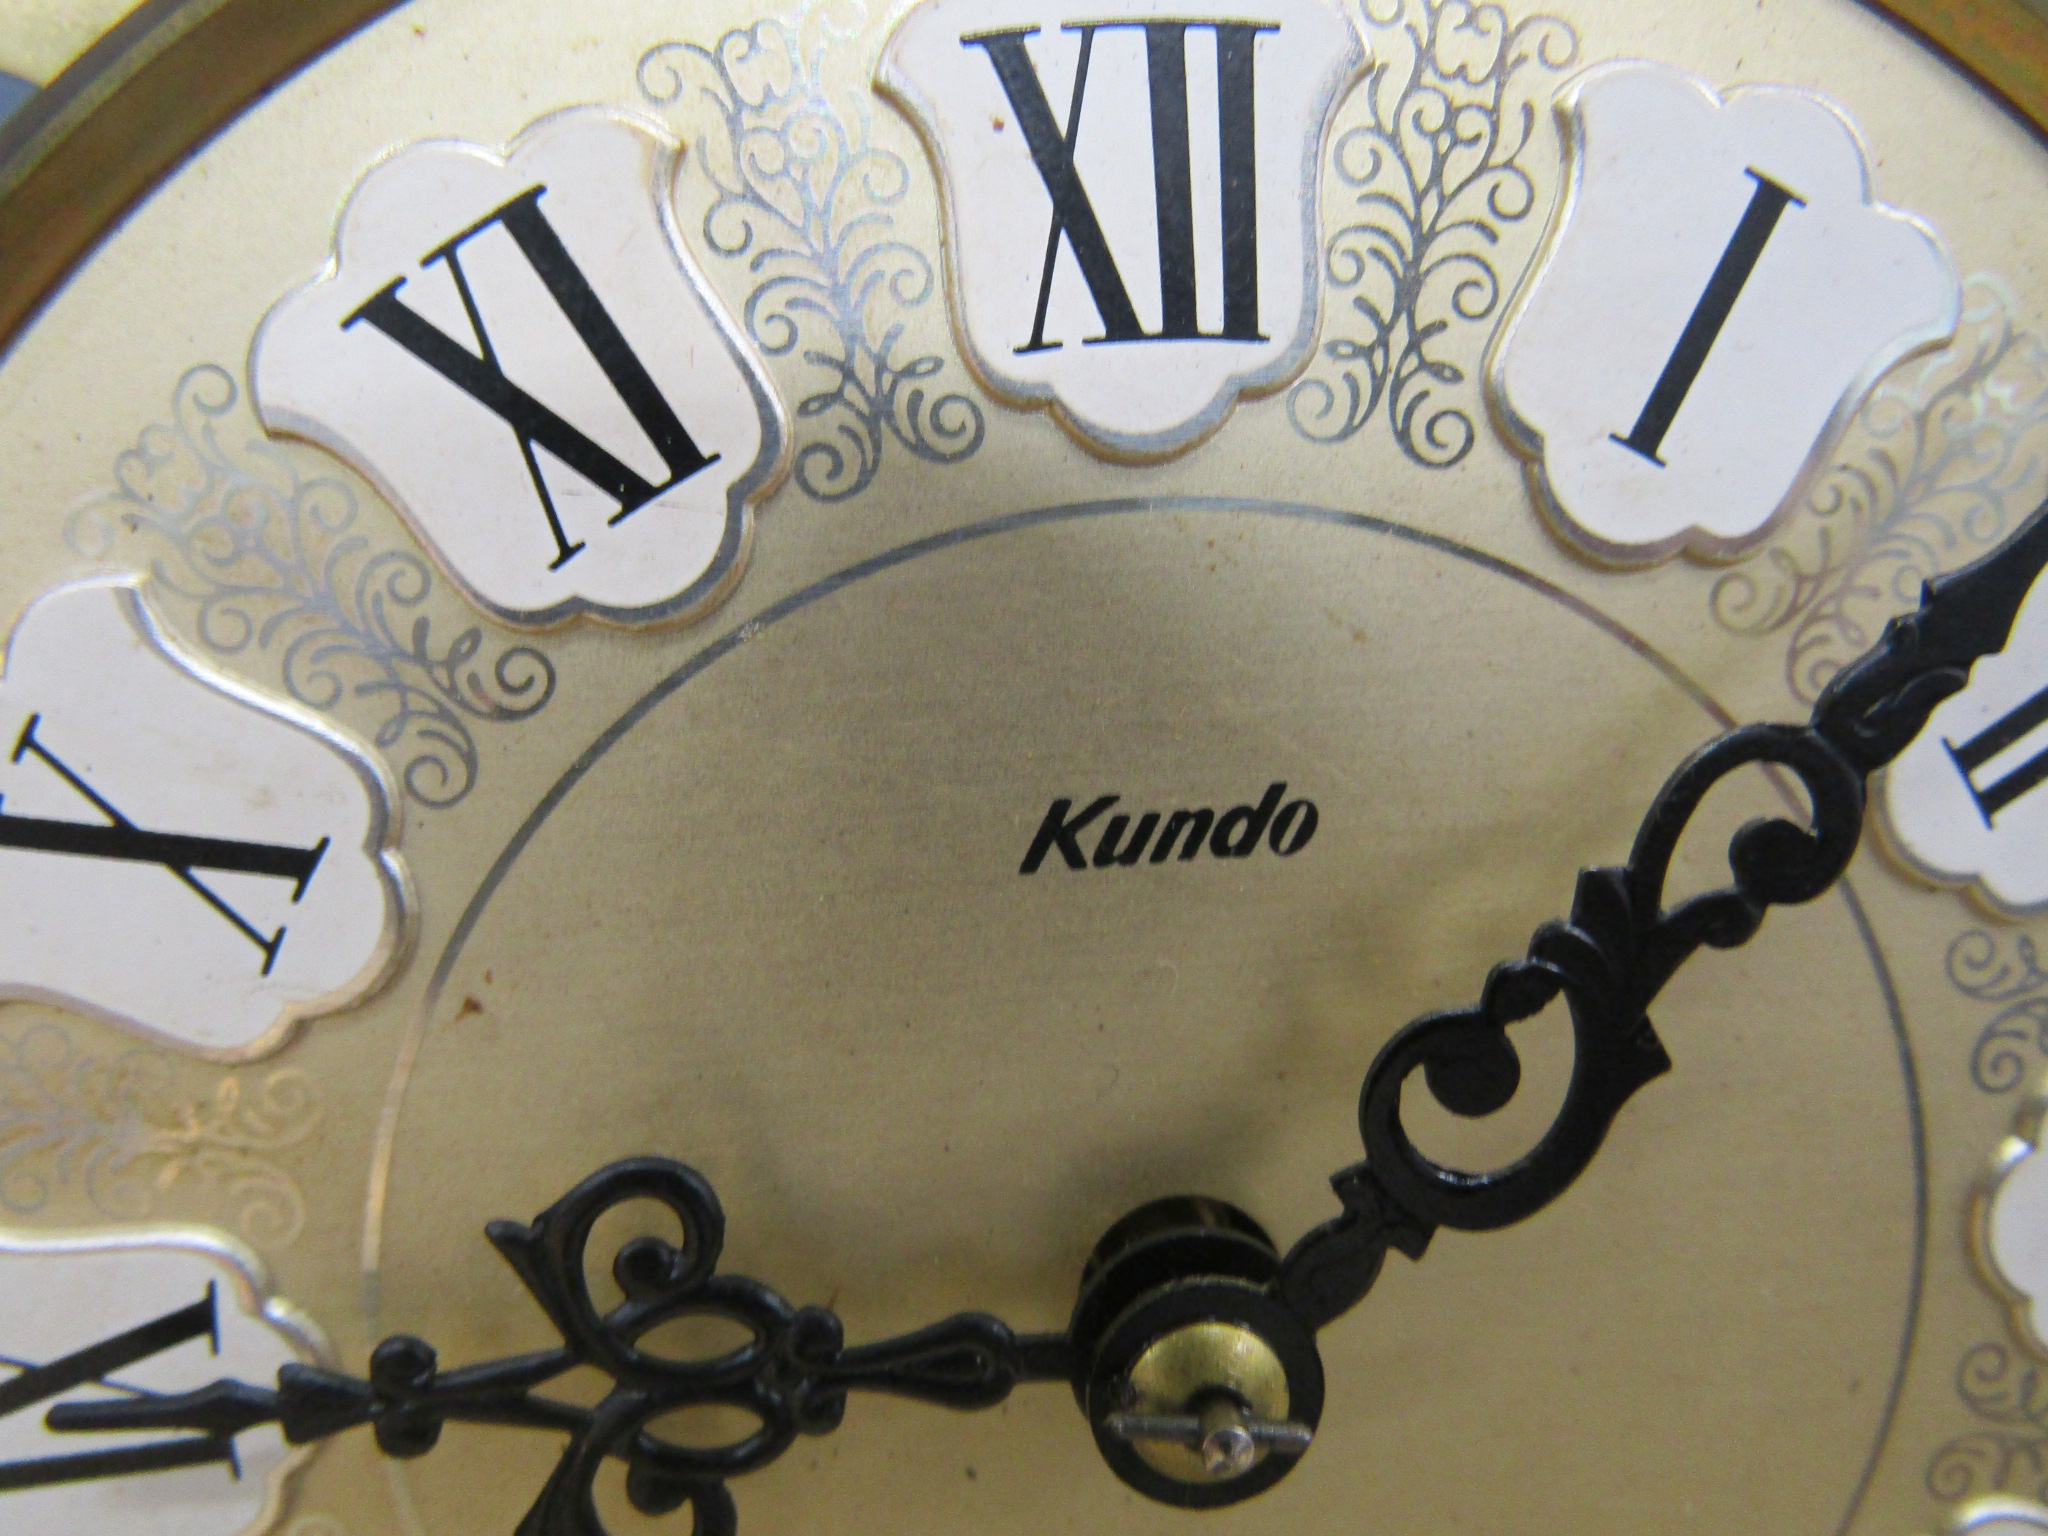 1930's Brass anniversary clock and Kundo anniversary clock, both with domes - Image 5 of 9